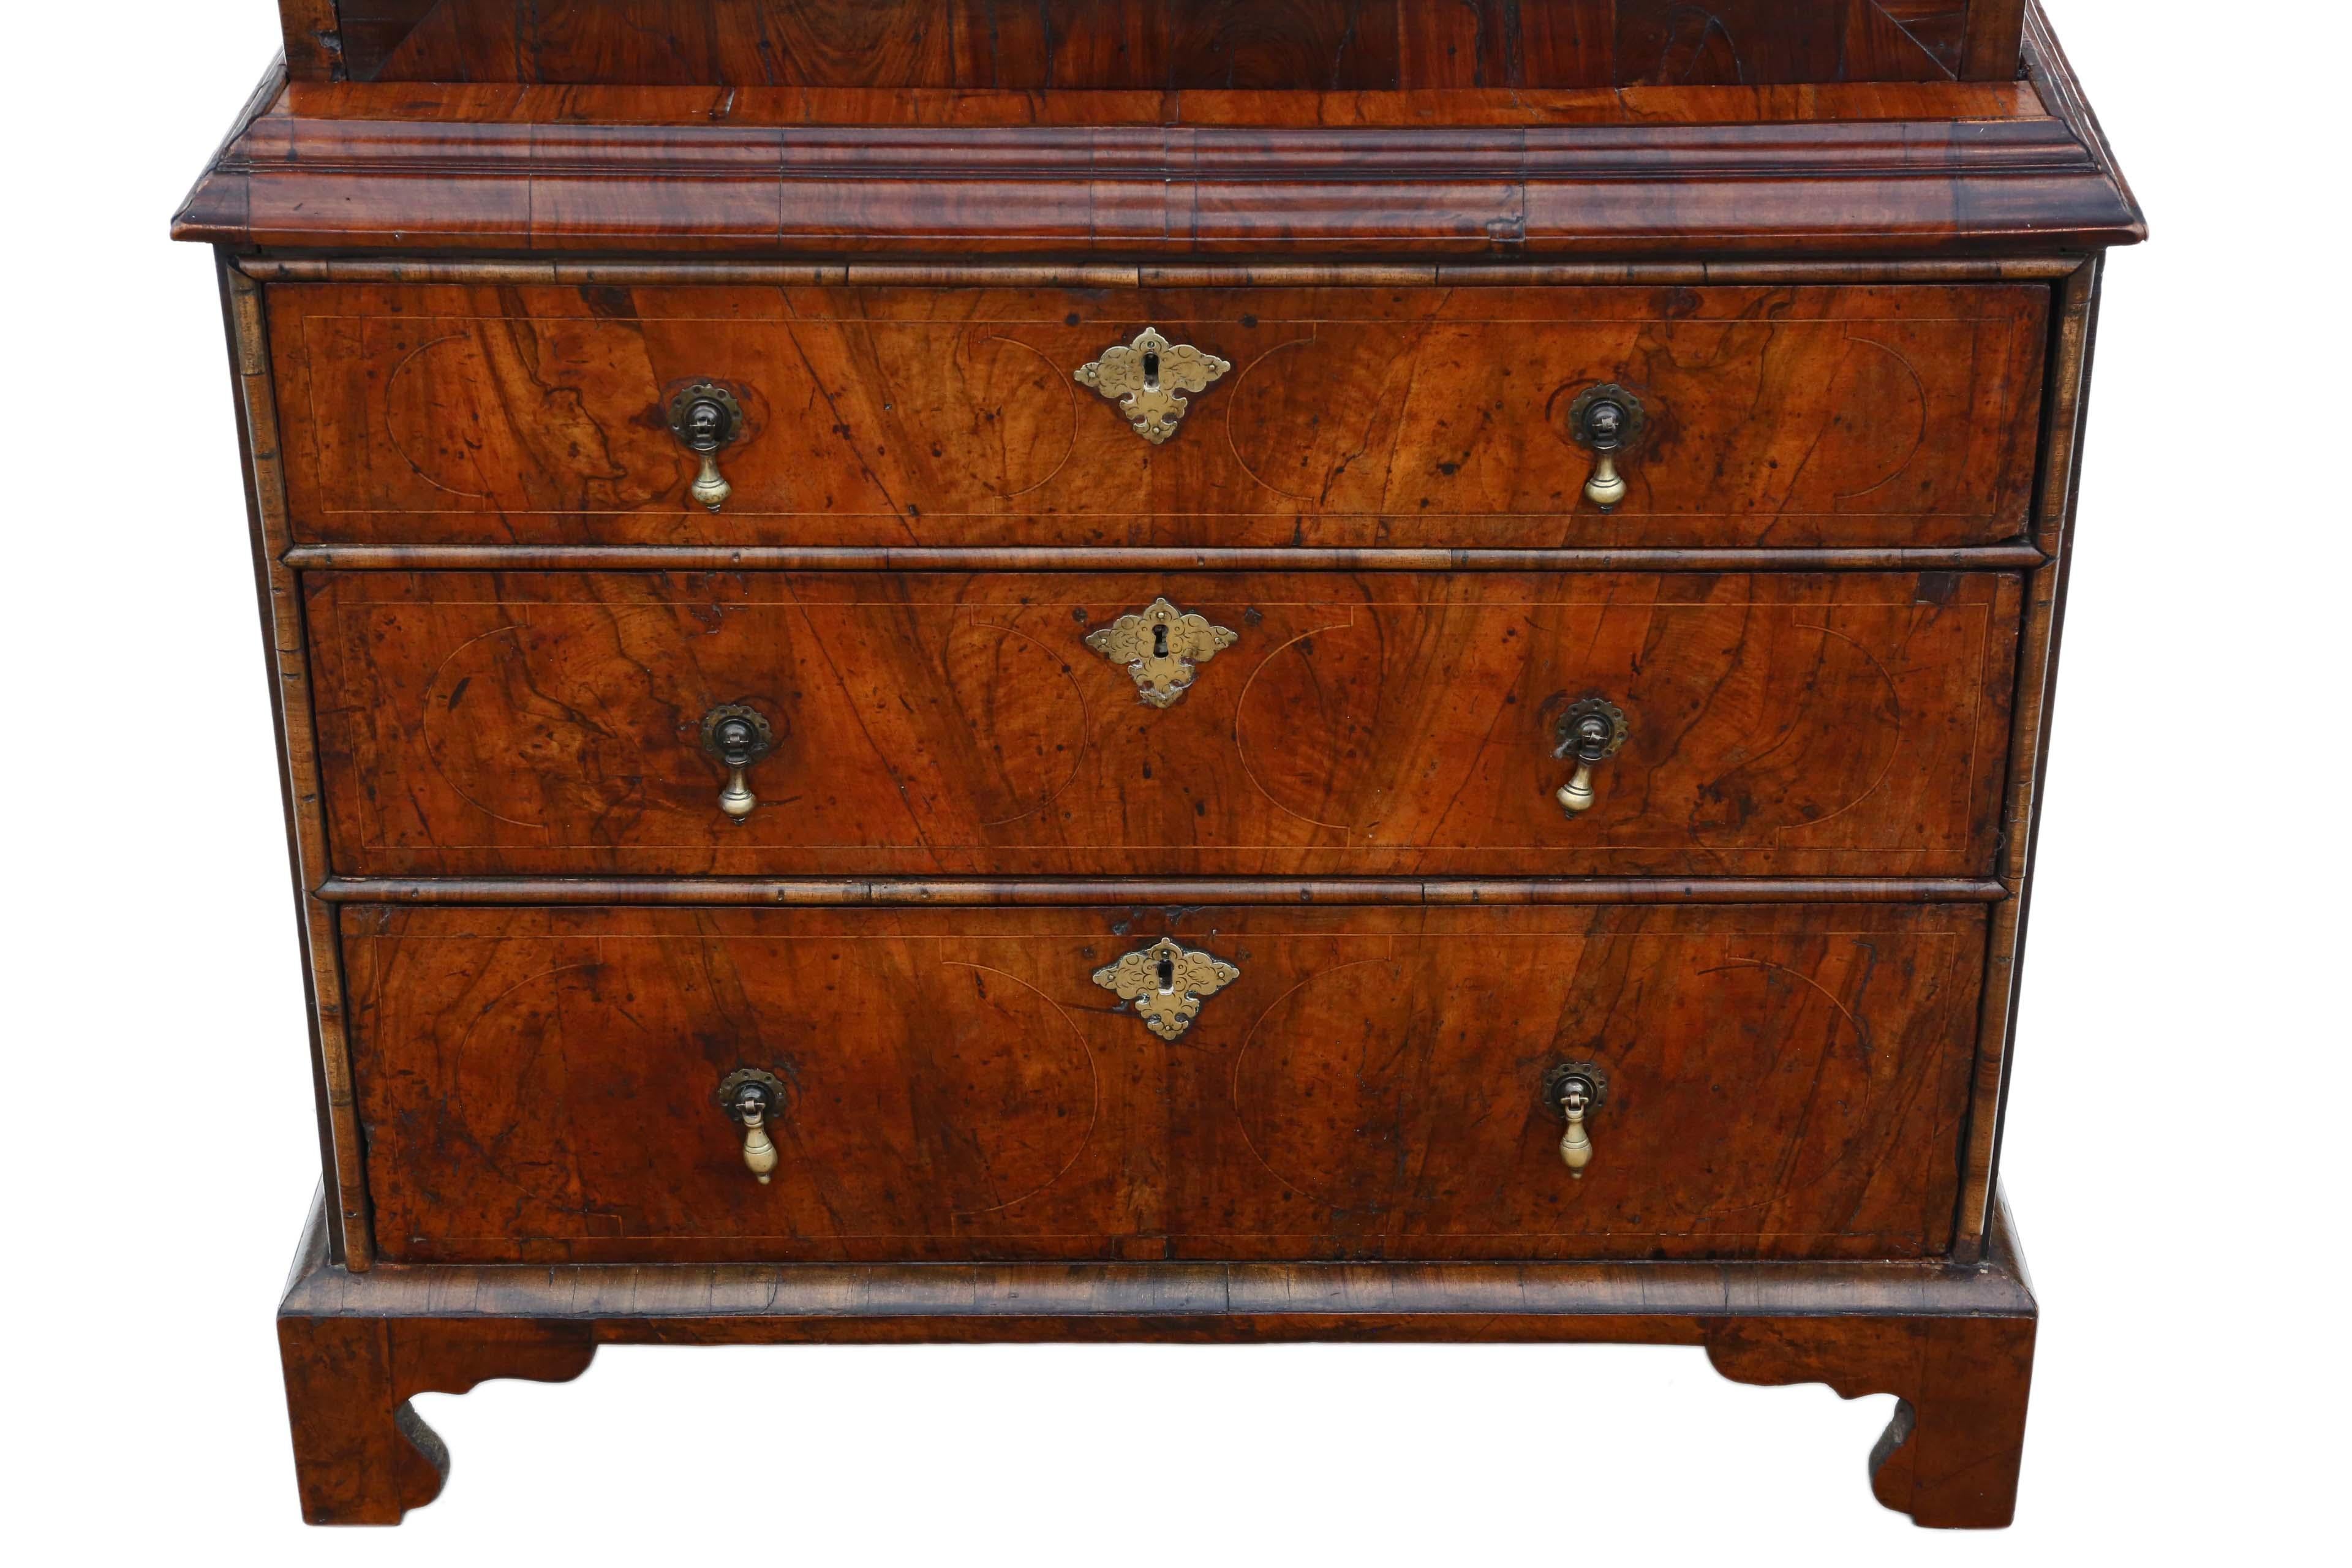 Antique Queen Anne Early 18th Century Inlaid Burr Walnut Escritoire Desk Chest For Sale 3